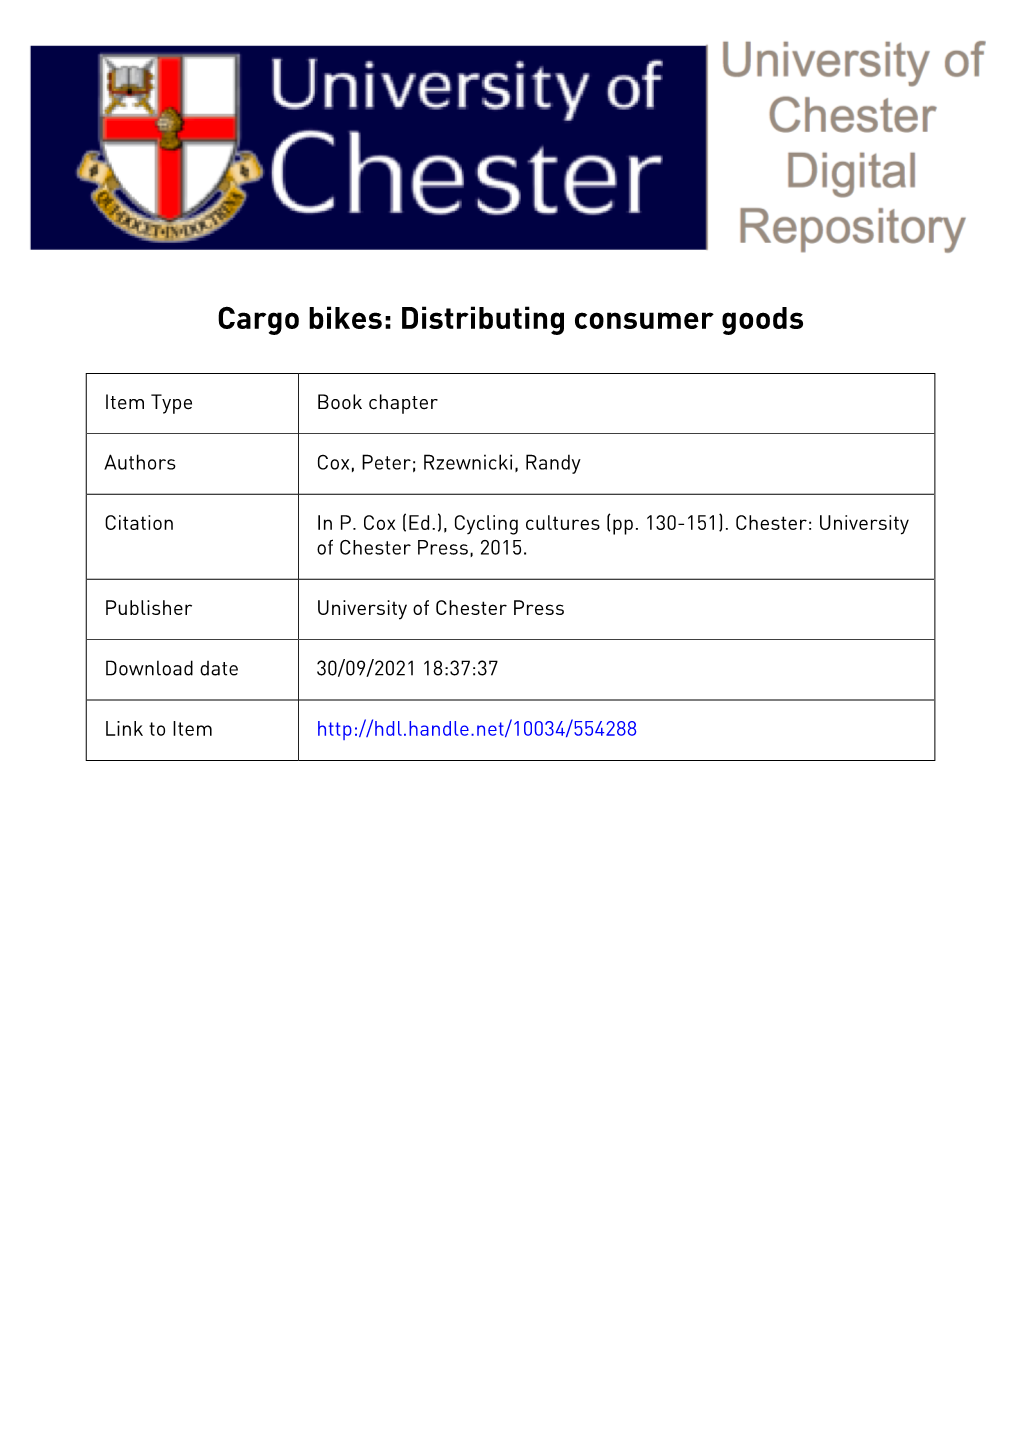 Cargo Bikes: Distributing Consumer Goods